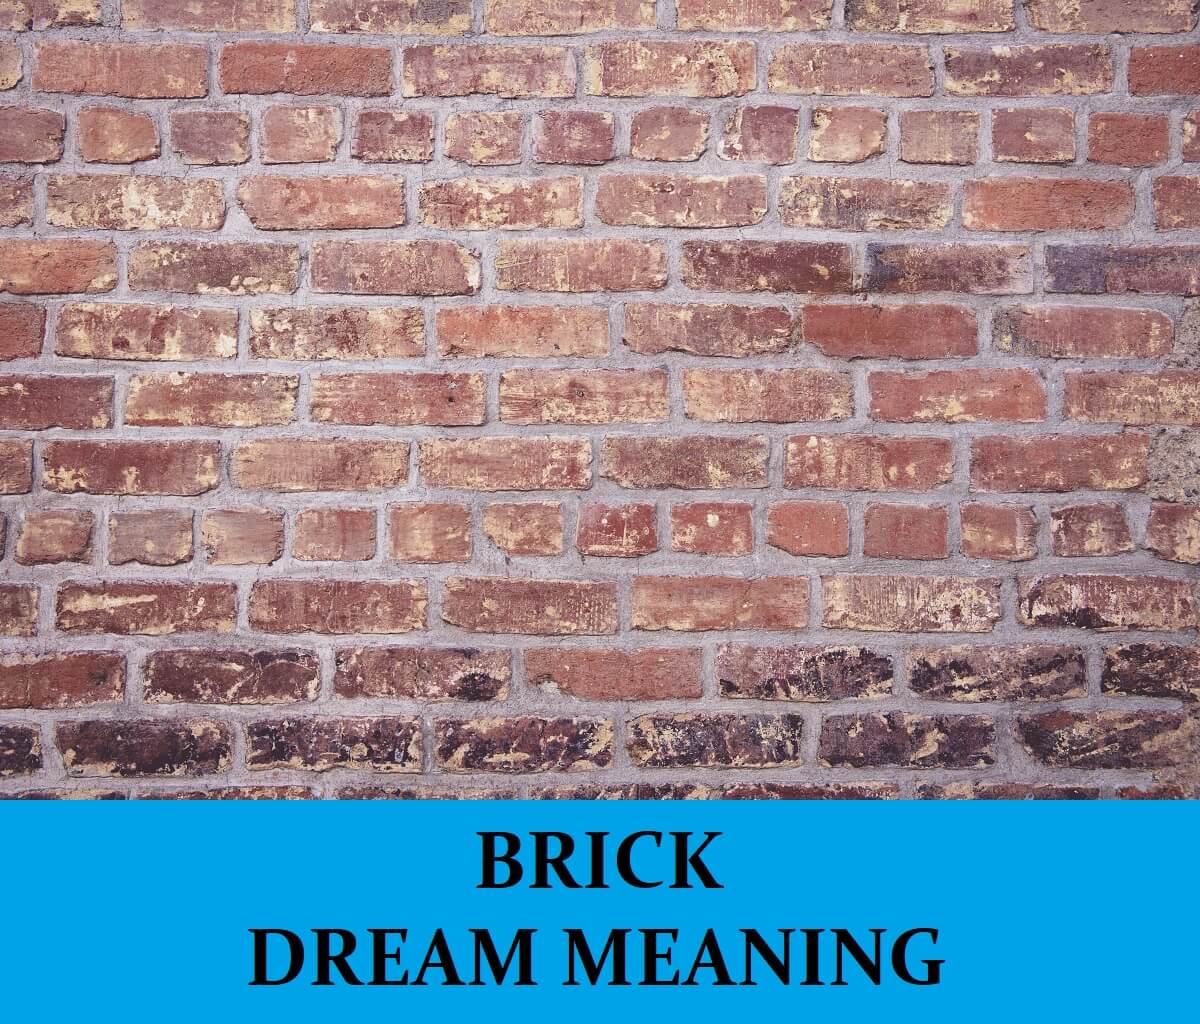 Dream About Bricks